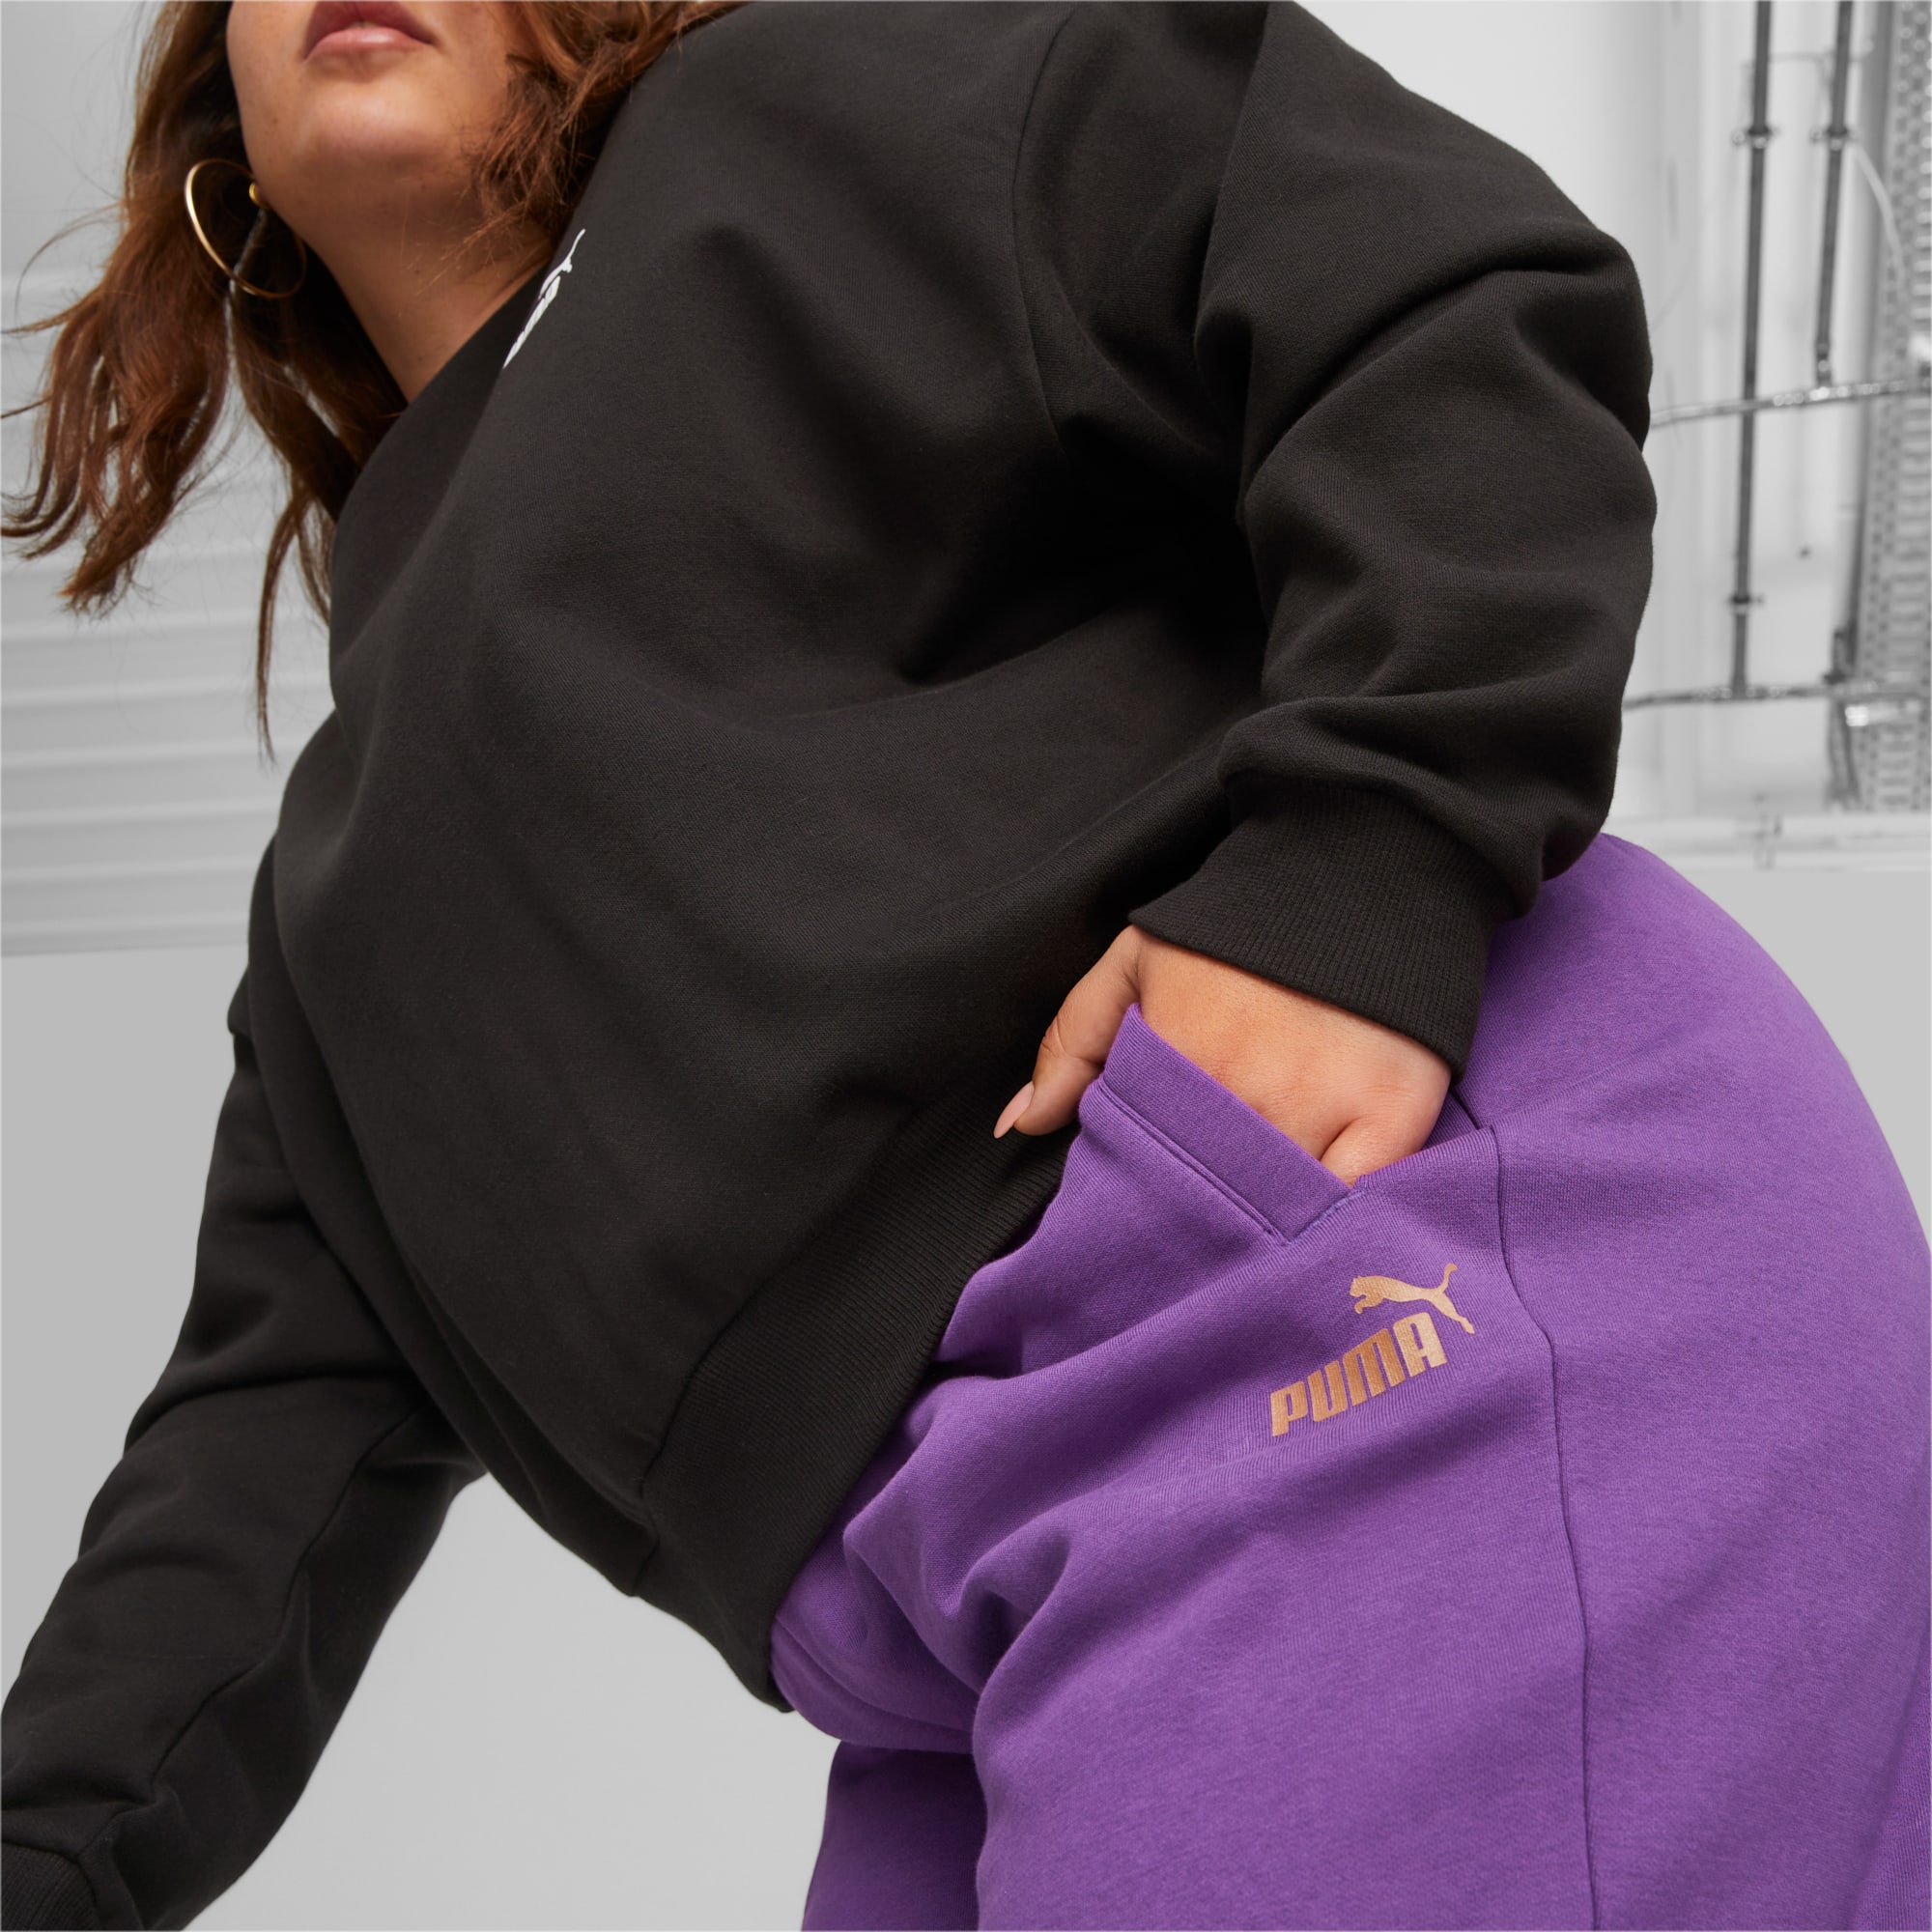 PUMA Power Logo Love Women's Sweatpants, Purple Pop, Size S, Clothing